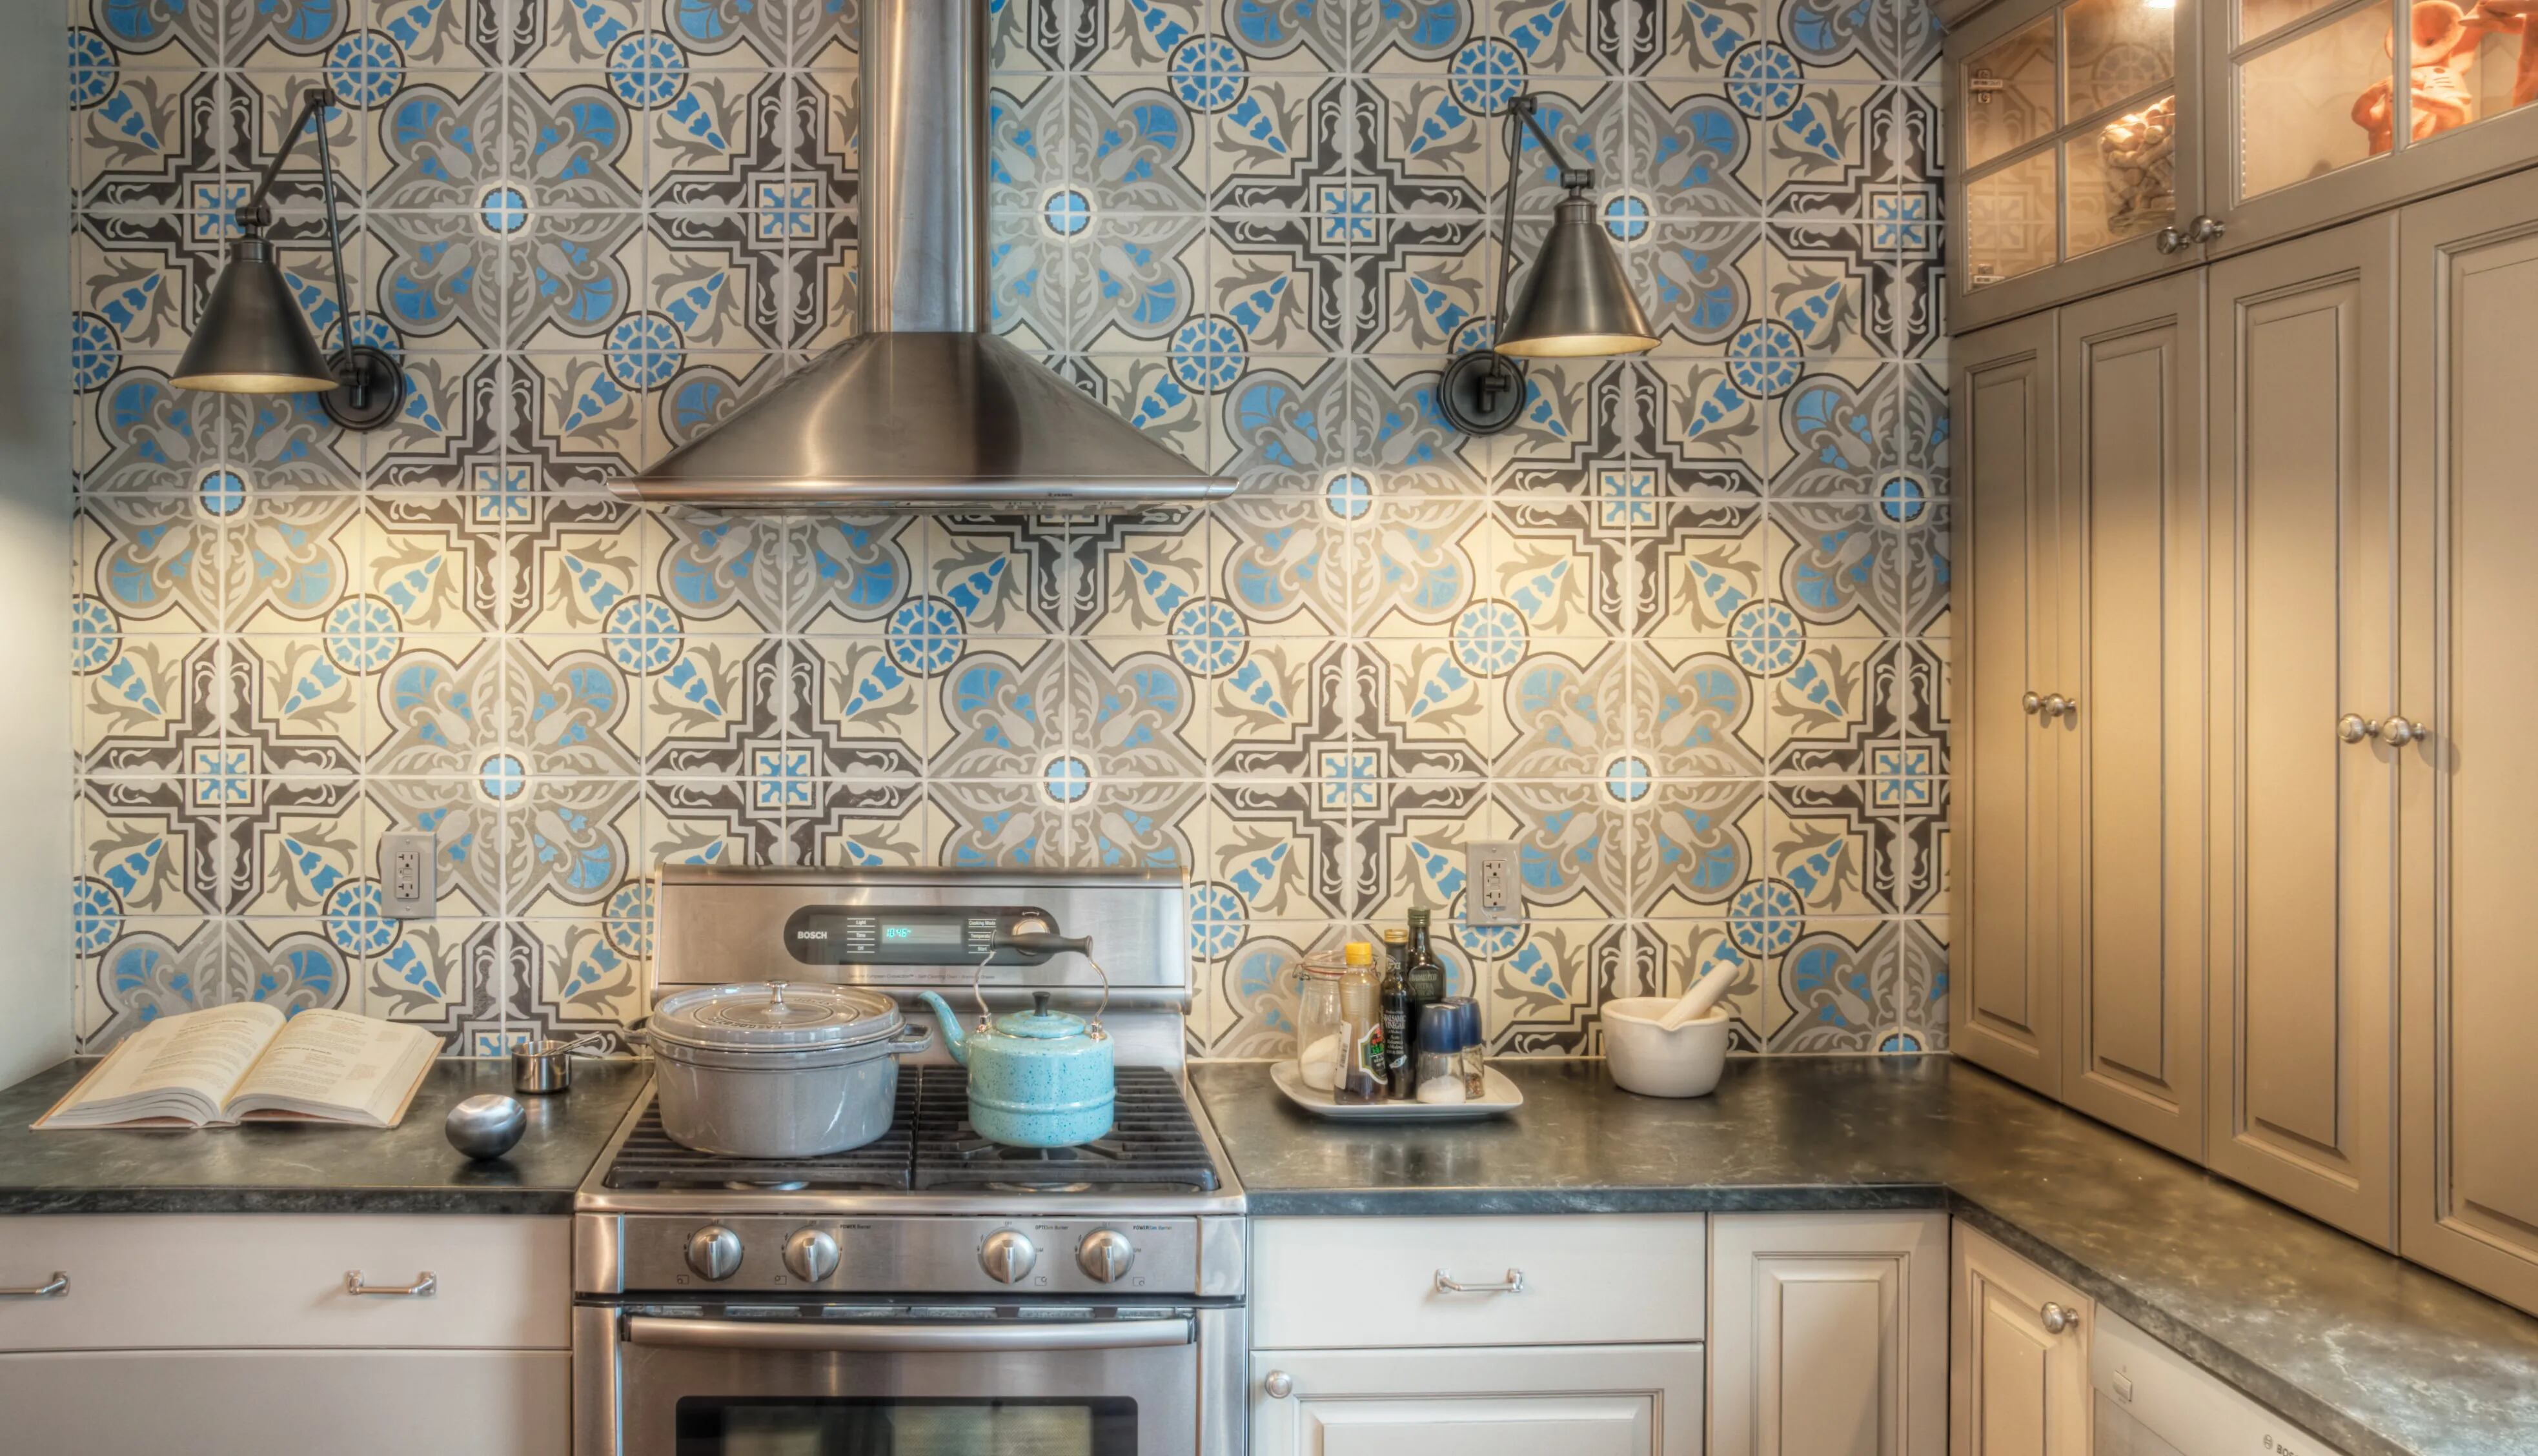 How kitchen backsplashes and bathroom tile can make an artistic ...